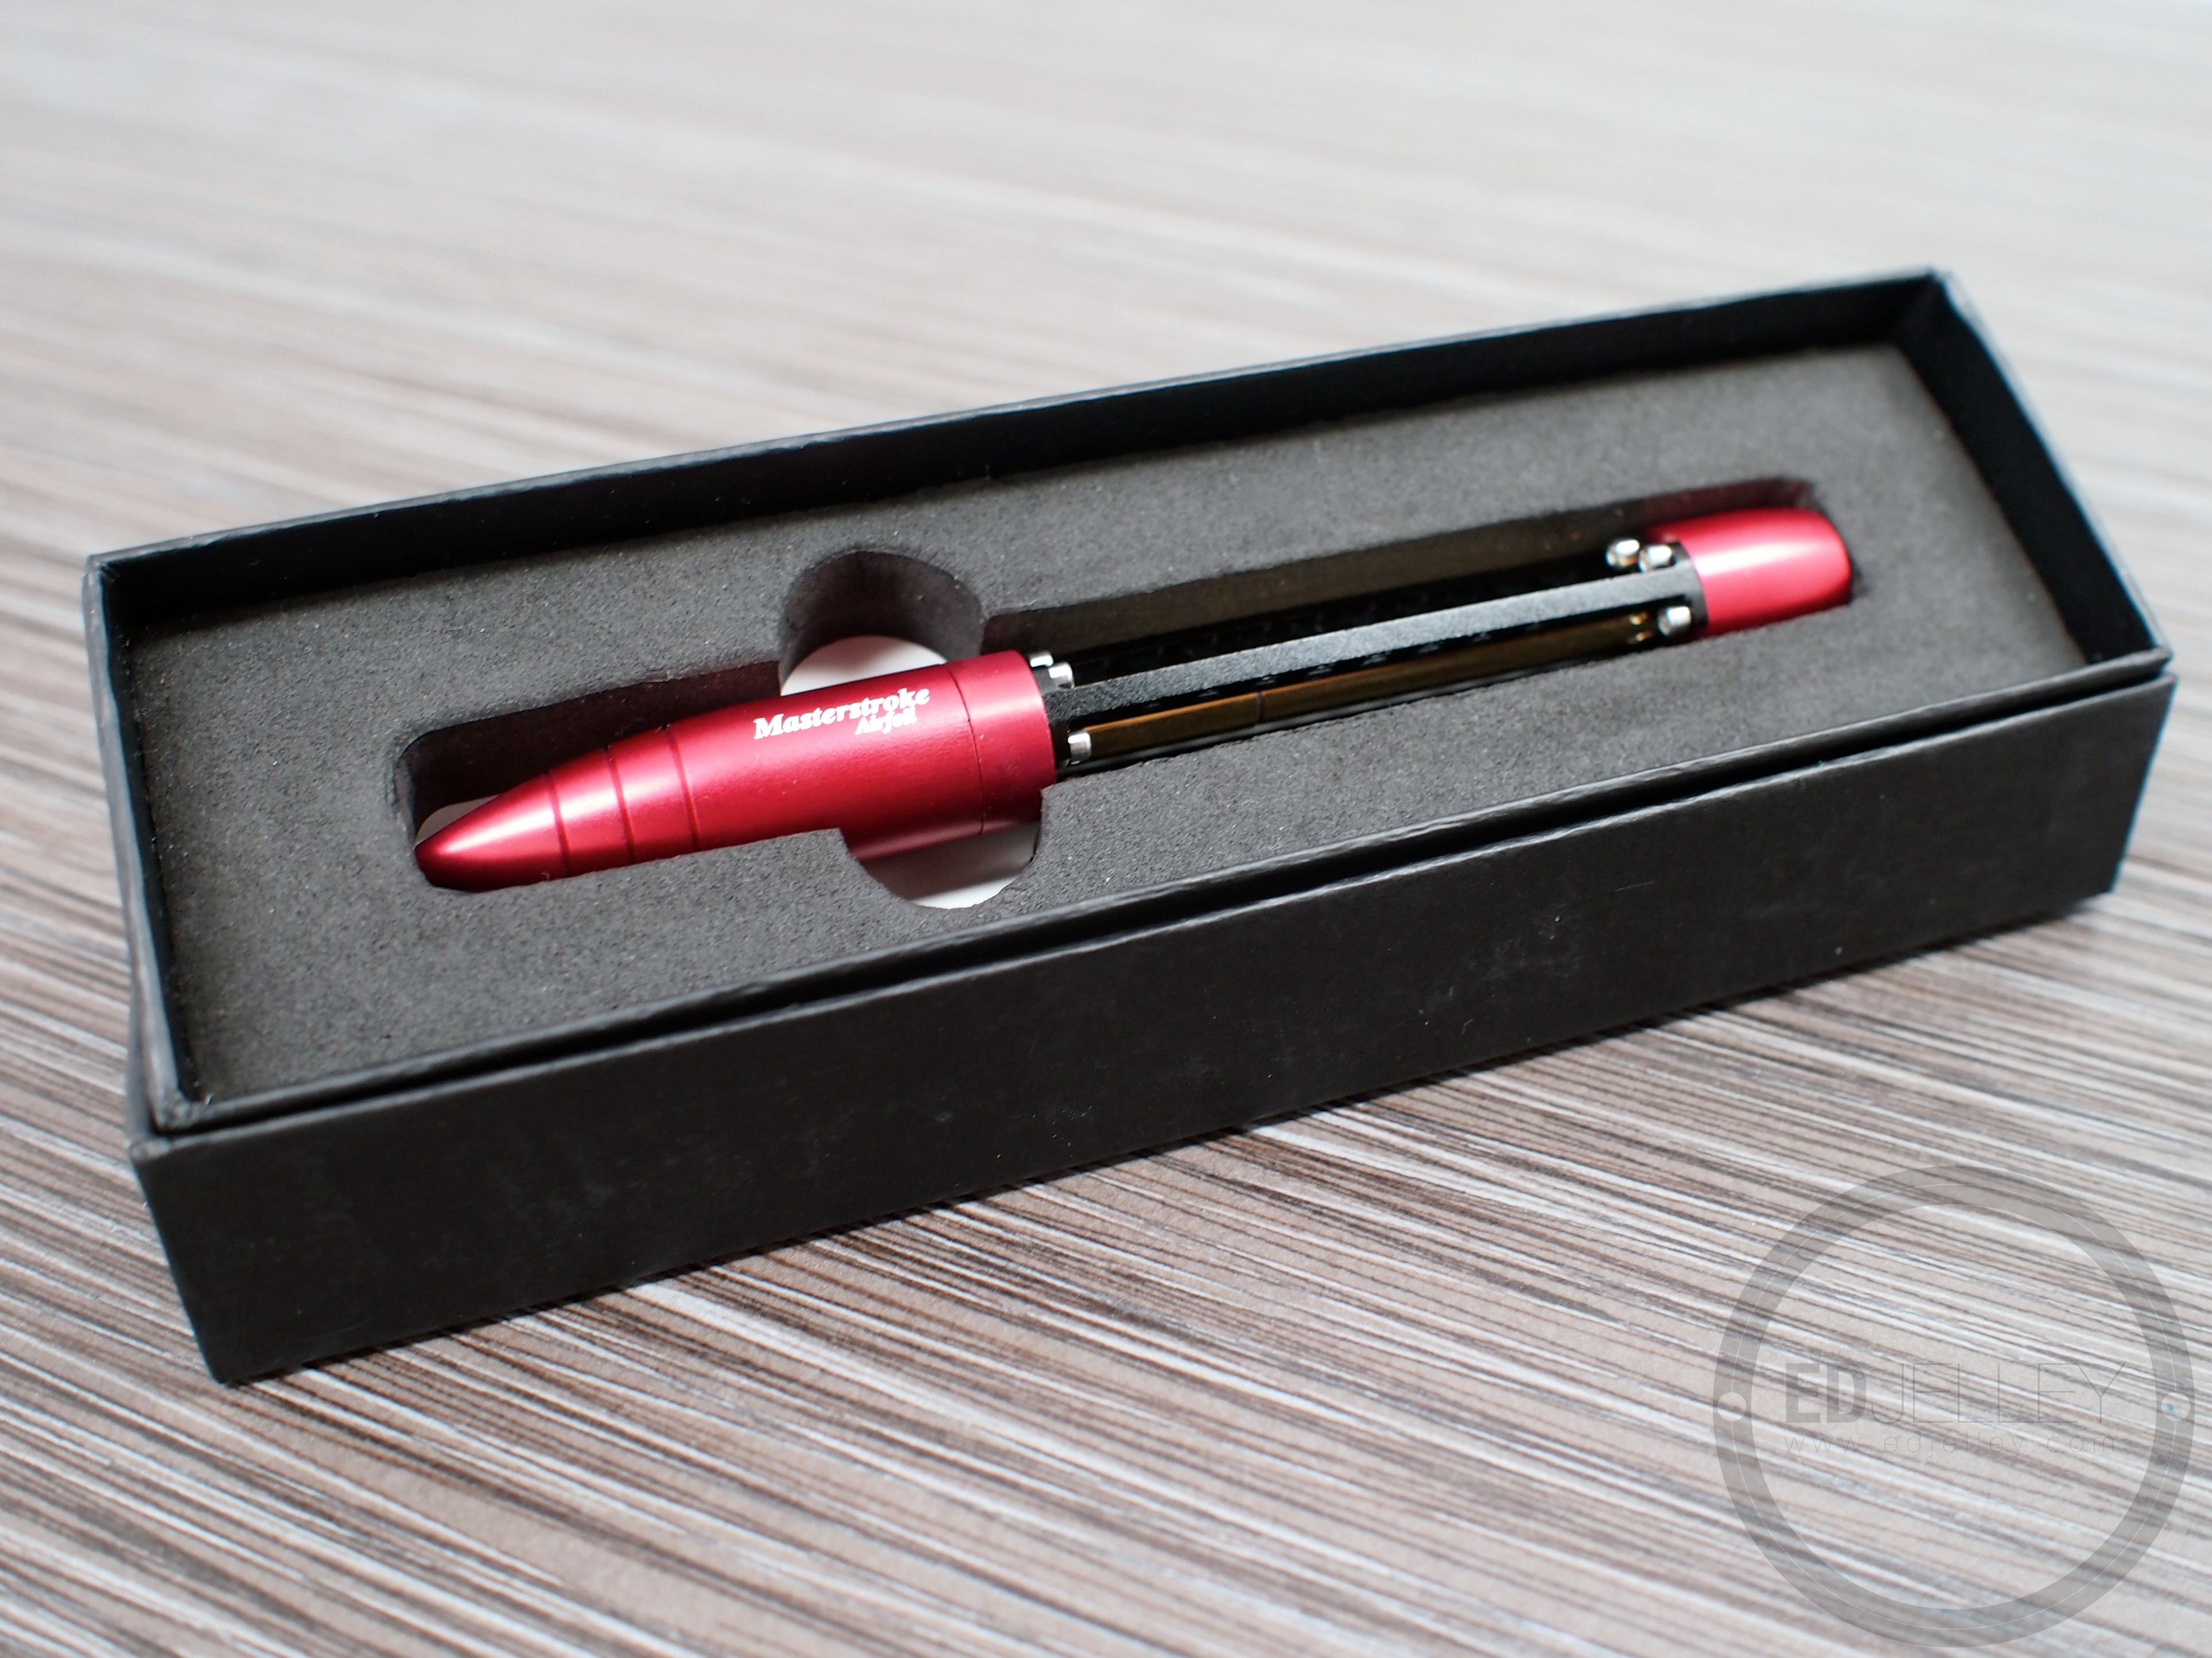 Masterstroke Pens “Airfoil” Twist Ballpoint Pen – Hands-On and
Kickstarter Launch